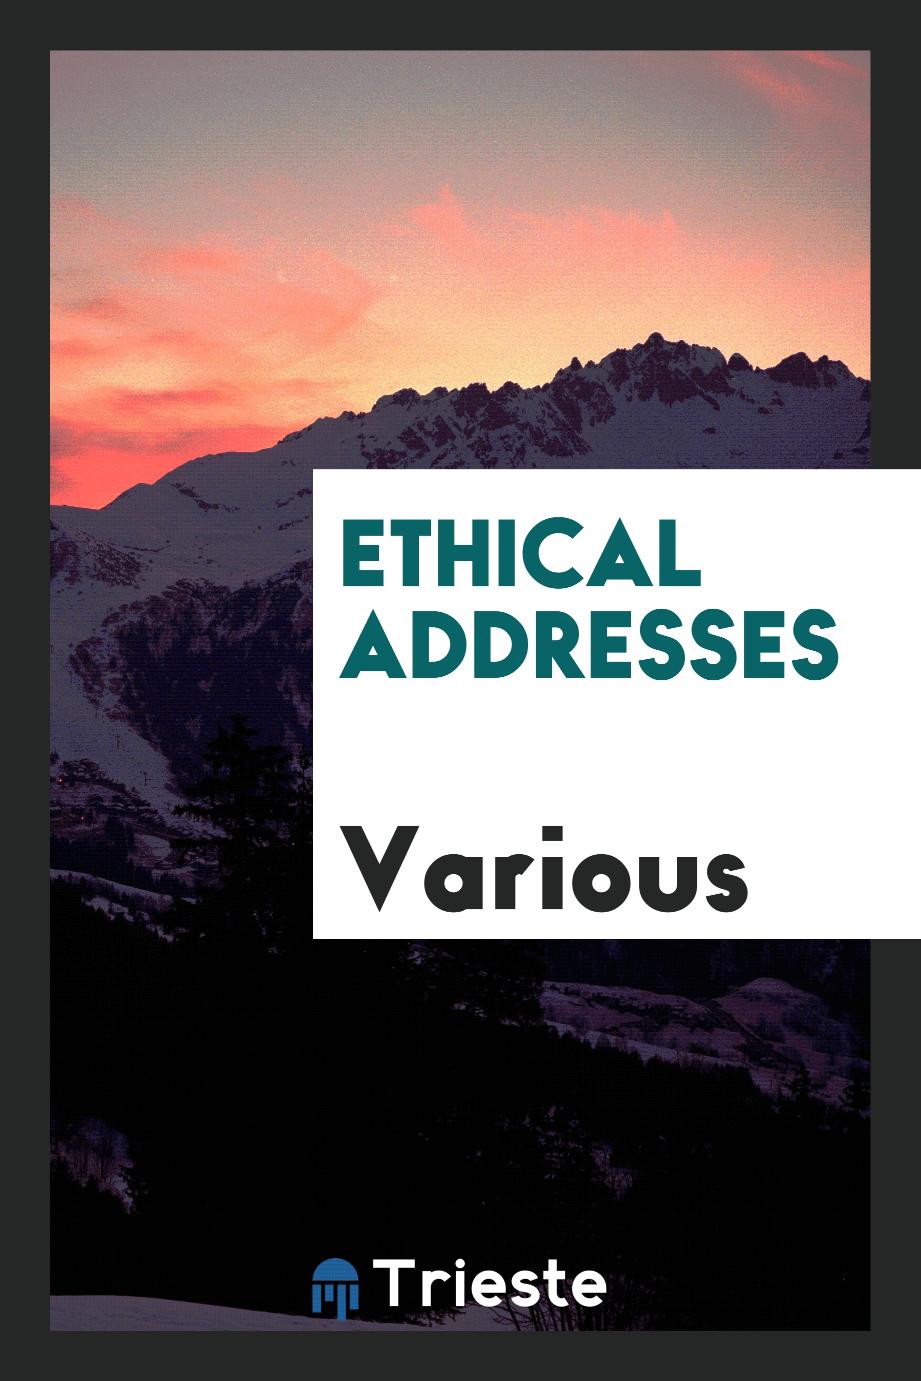 Ethical addresses